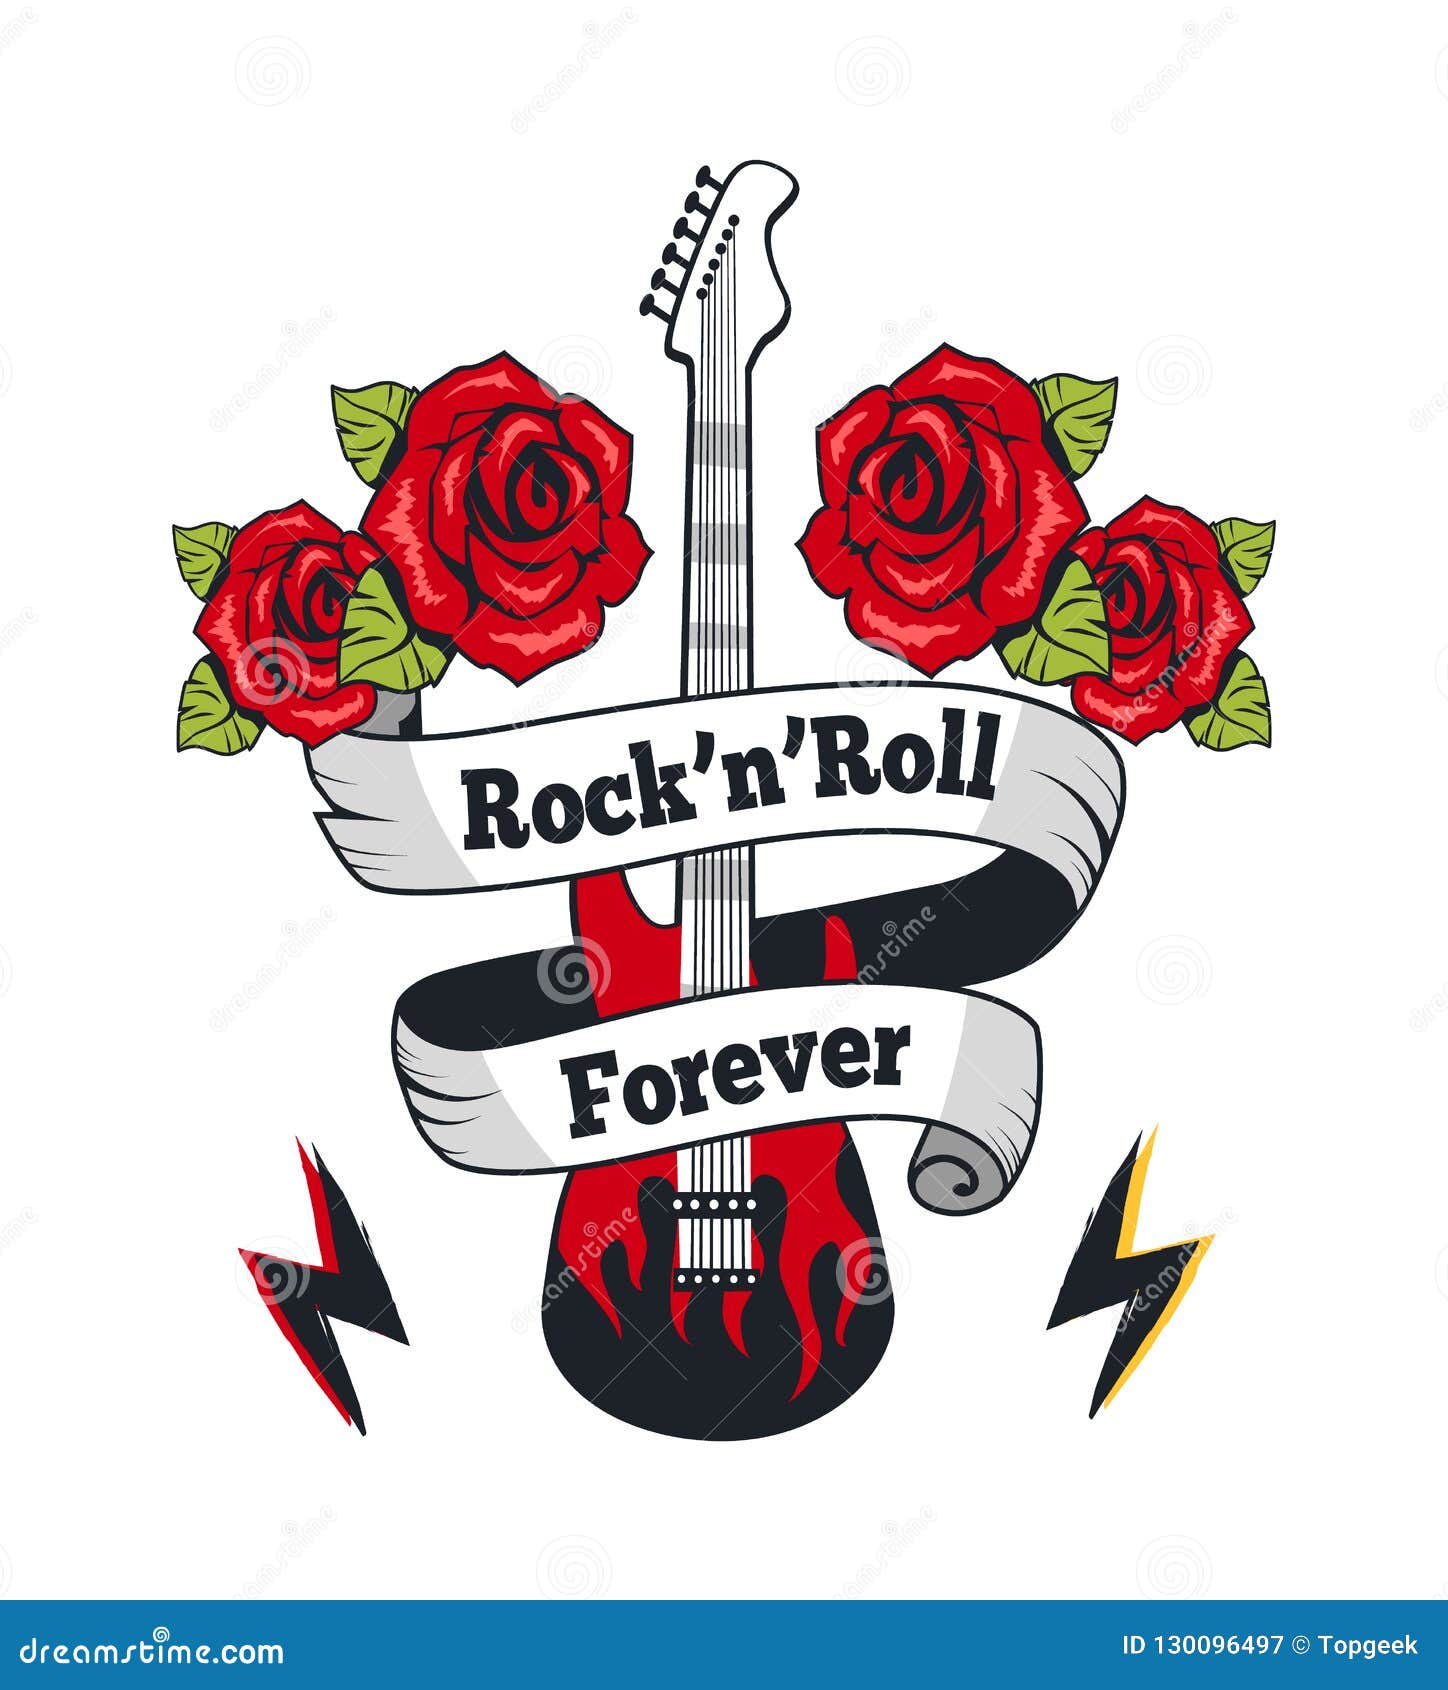 rock-n-roll forever guitar  